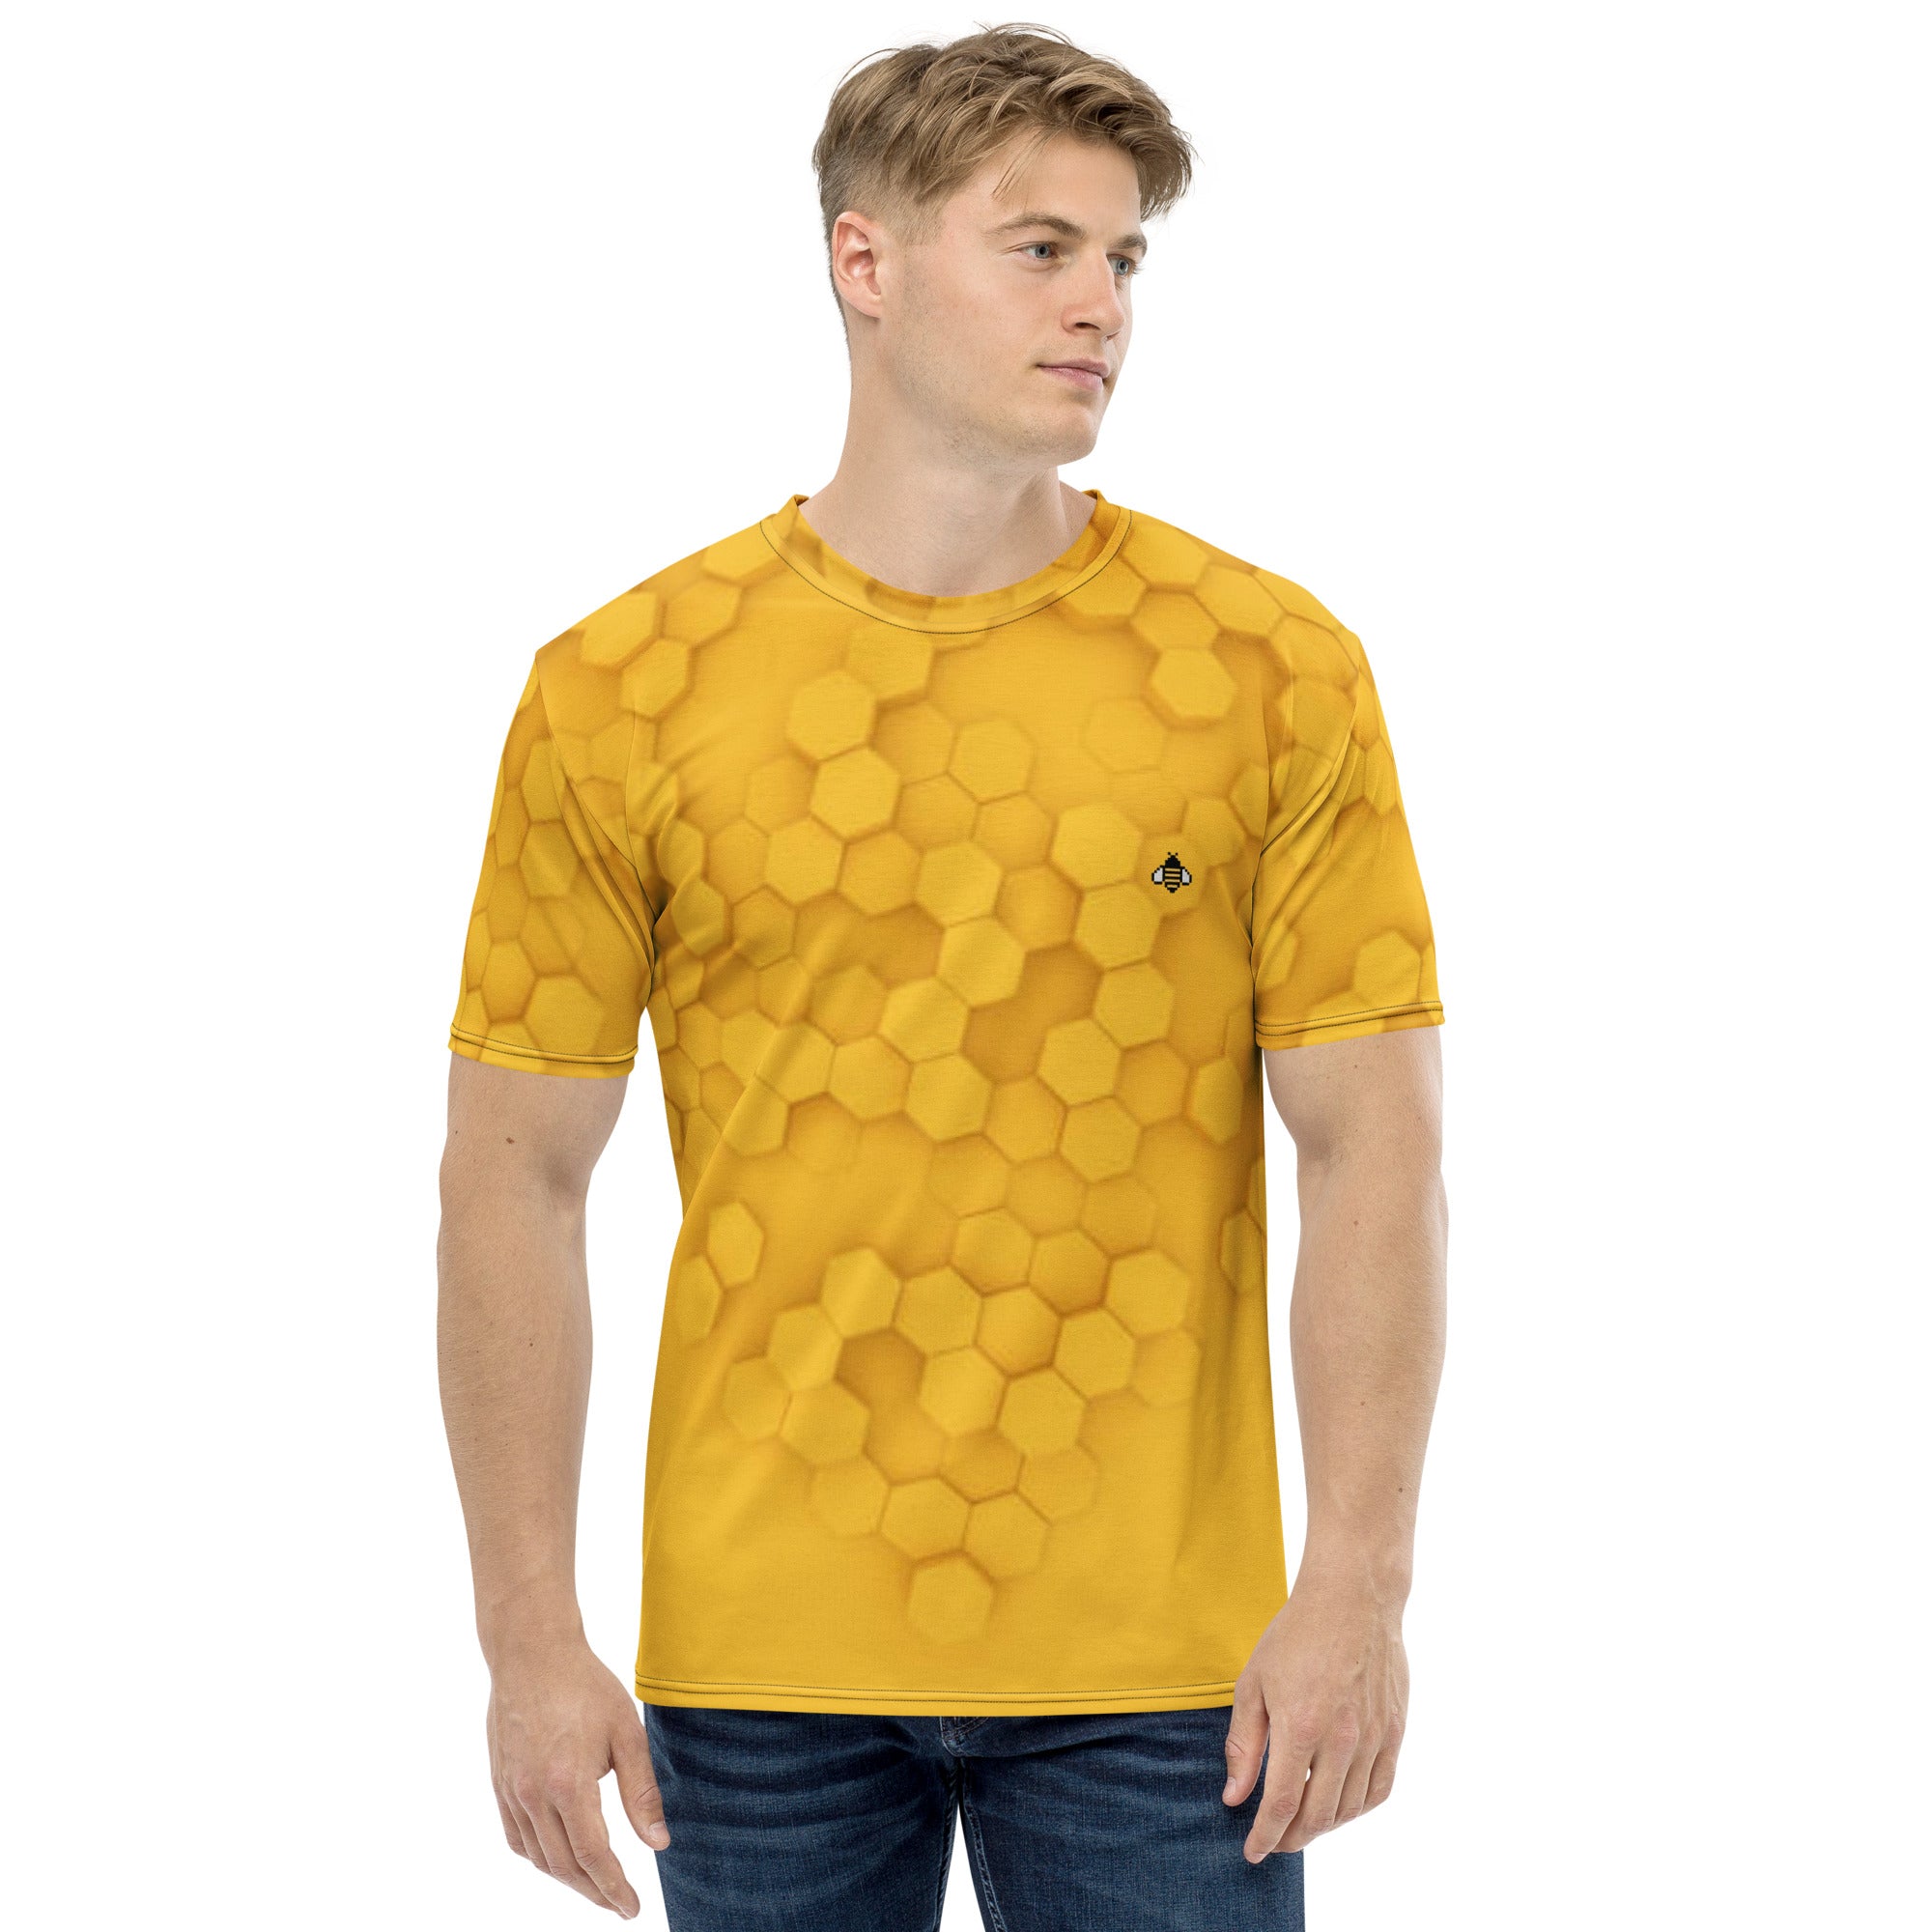 Honeycomb Men's TShirt - Front - https://ascensionemporium.net